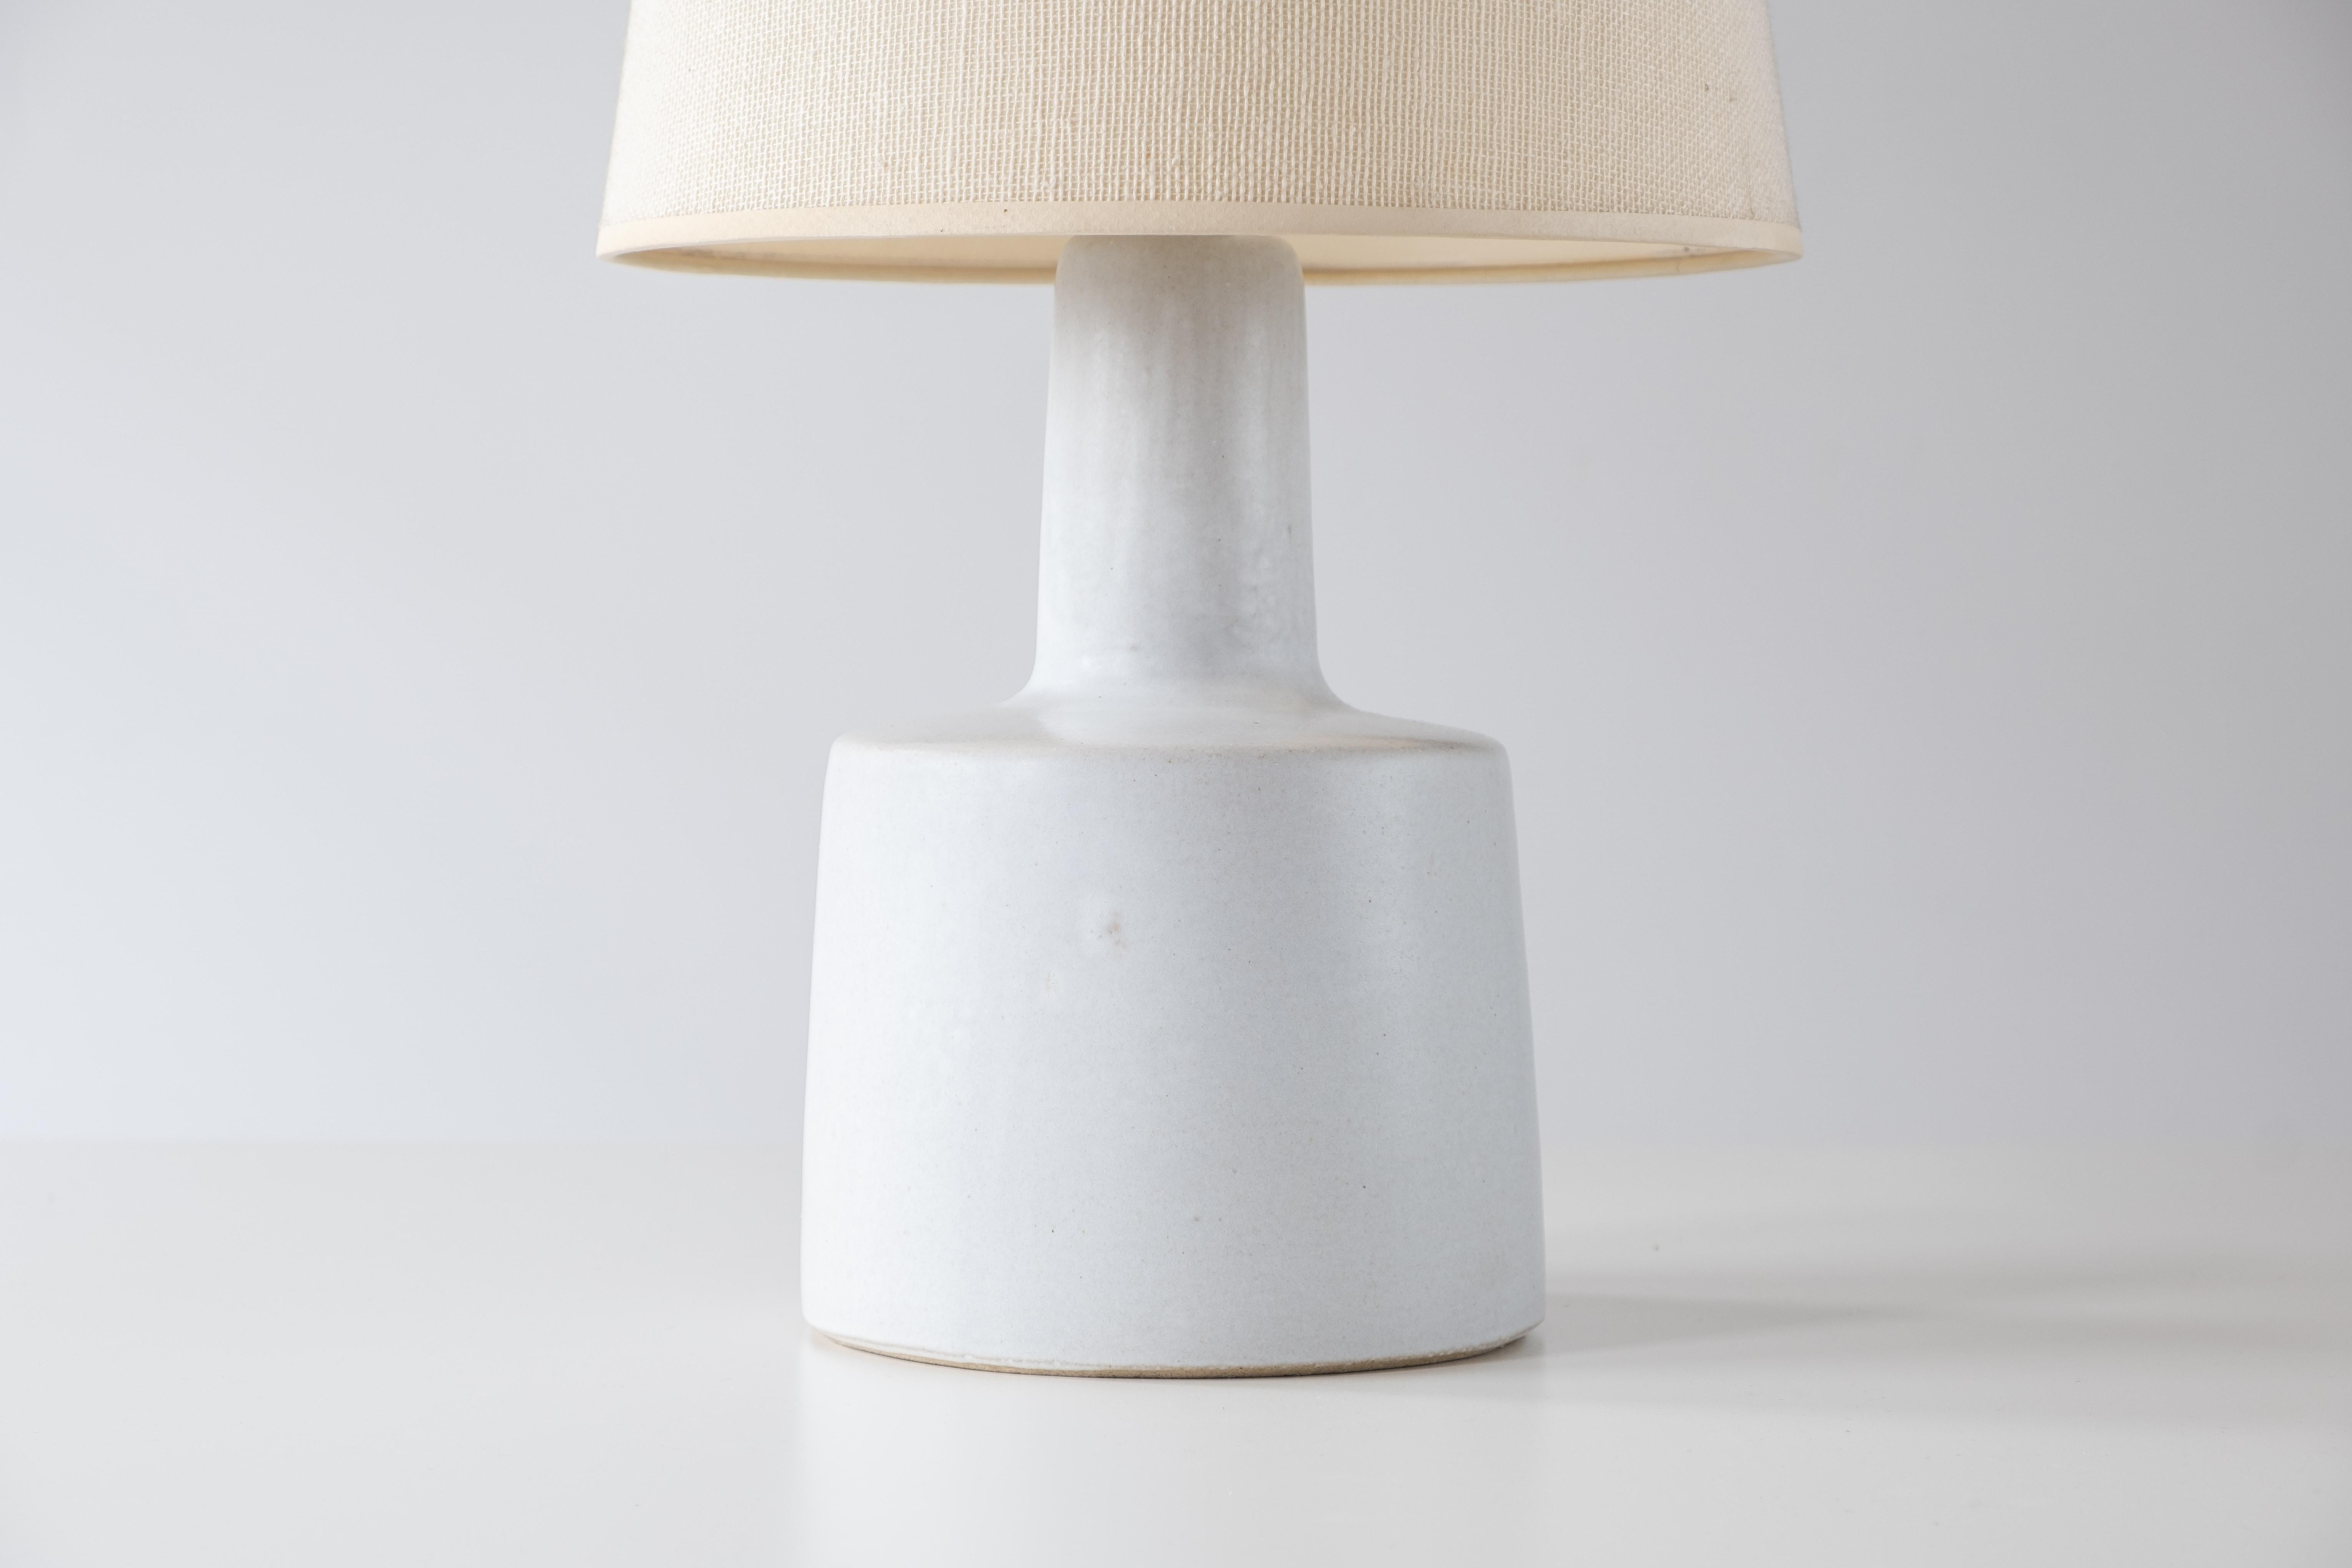 Glazed Martz / Marshall Studios Ceramic Pottery Table Lamp — Satin Speckled White Glaze For Sale